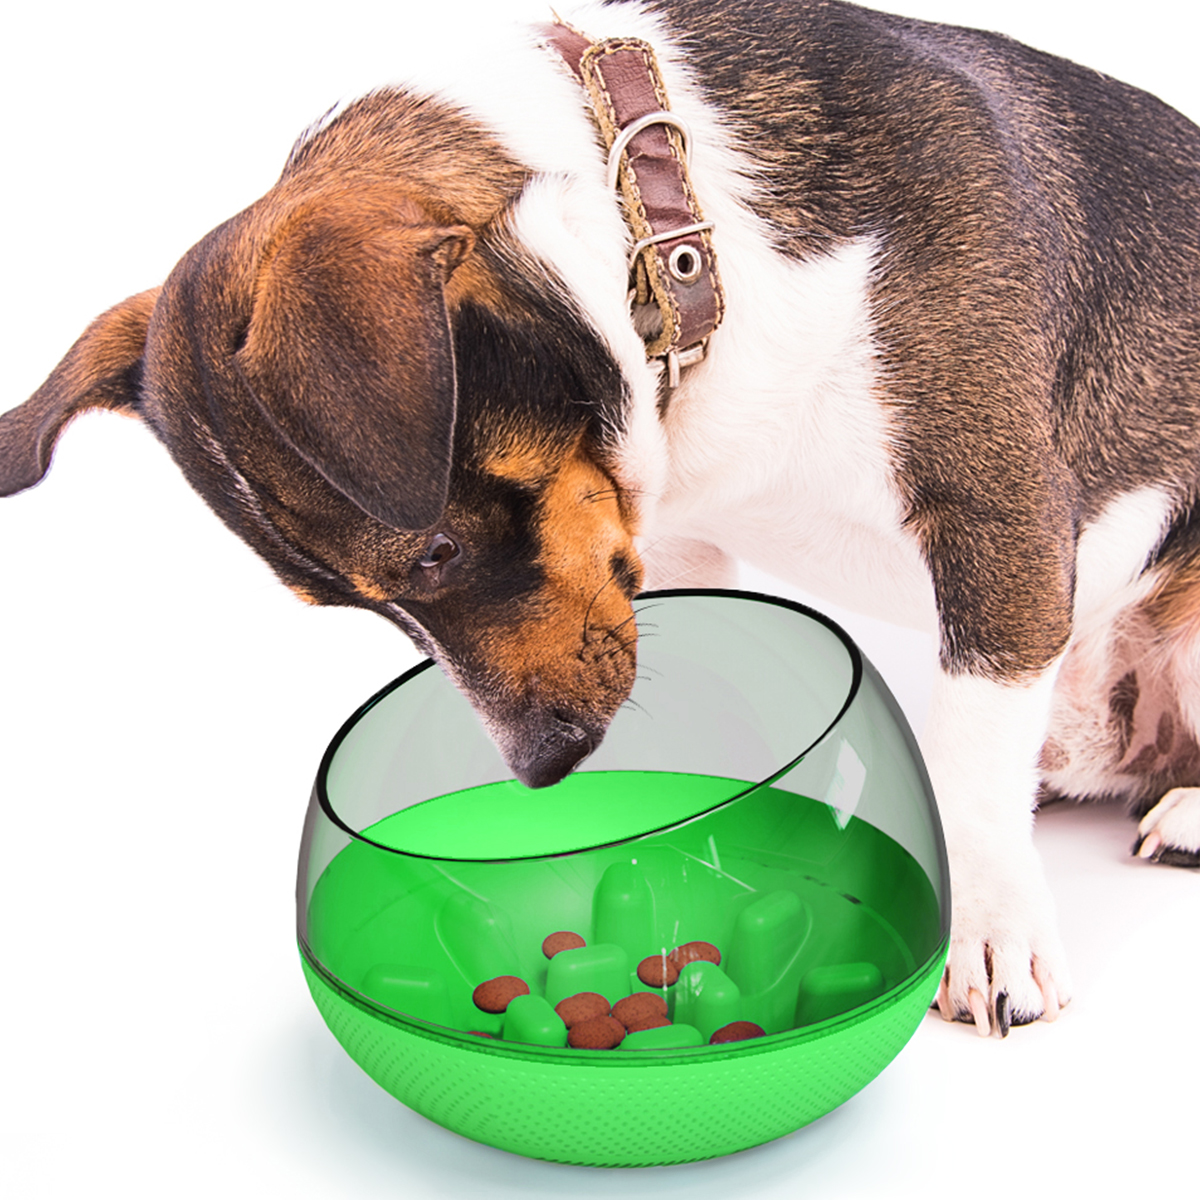 New design space capsule shaking pet slow food bowl tumbler cat and dog food bowl